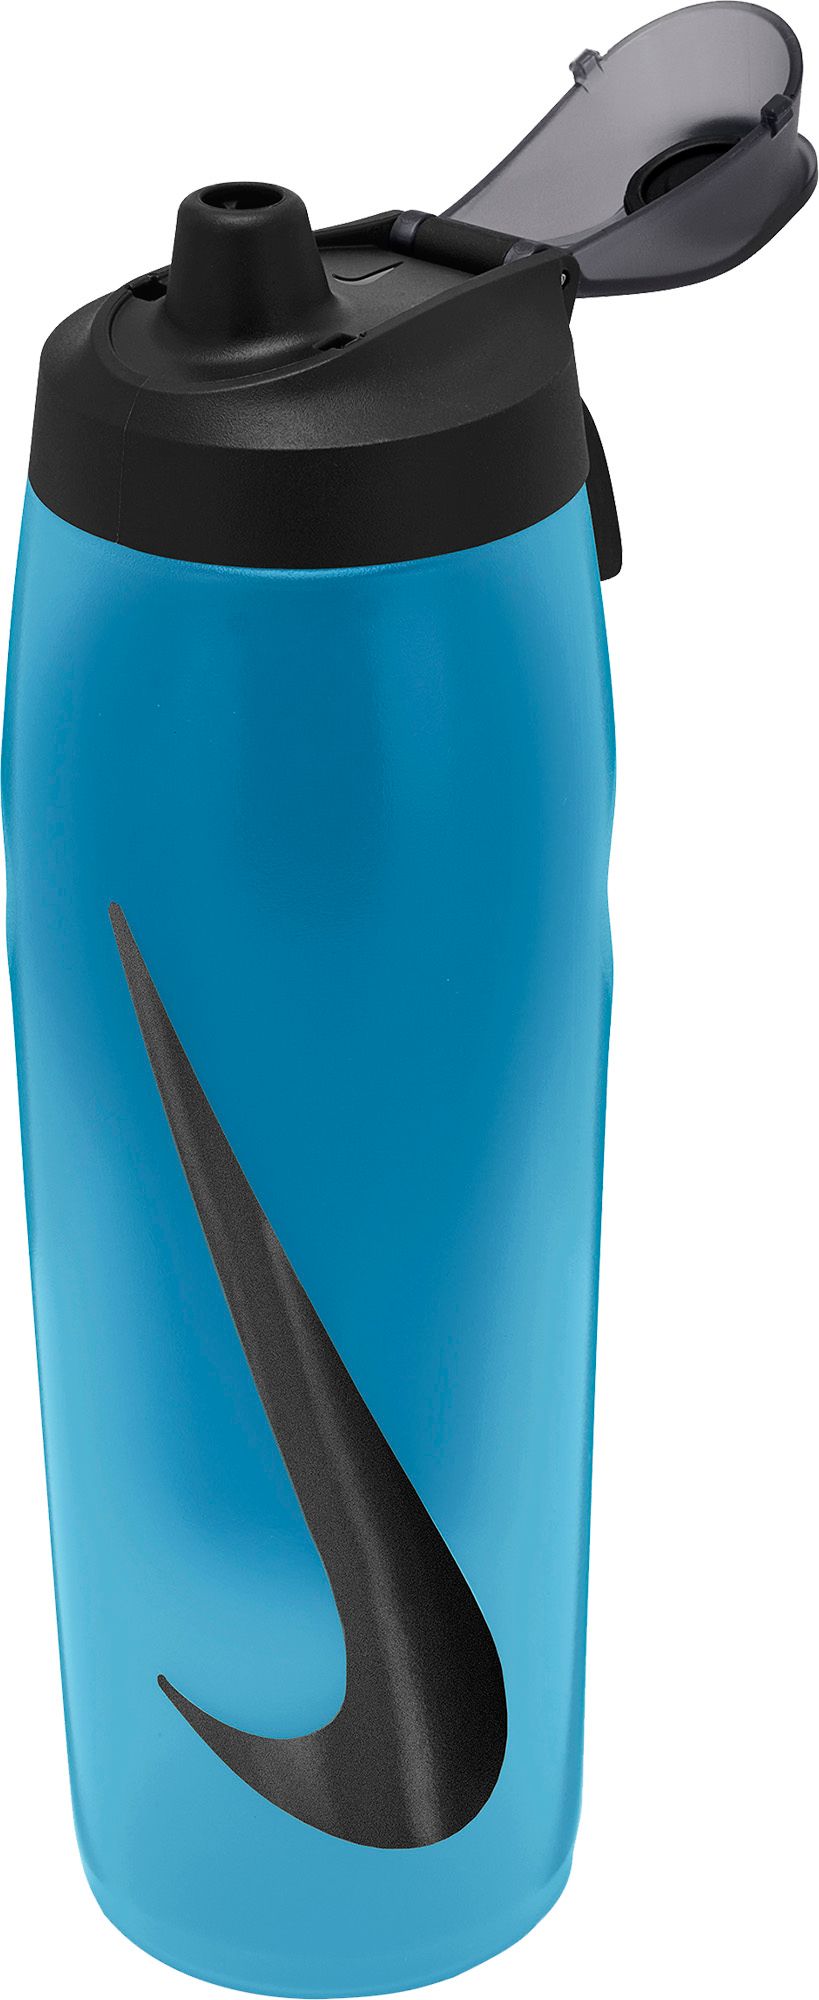 Nike Refuel 32 oz. Water Bottle with Locking Lid